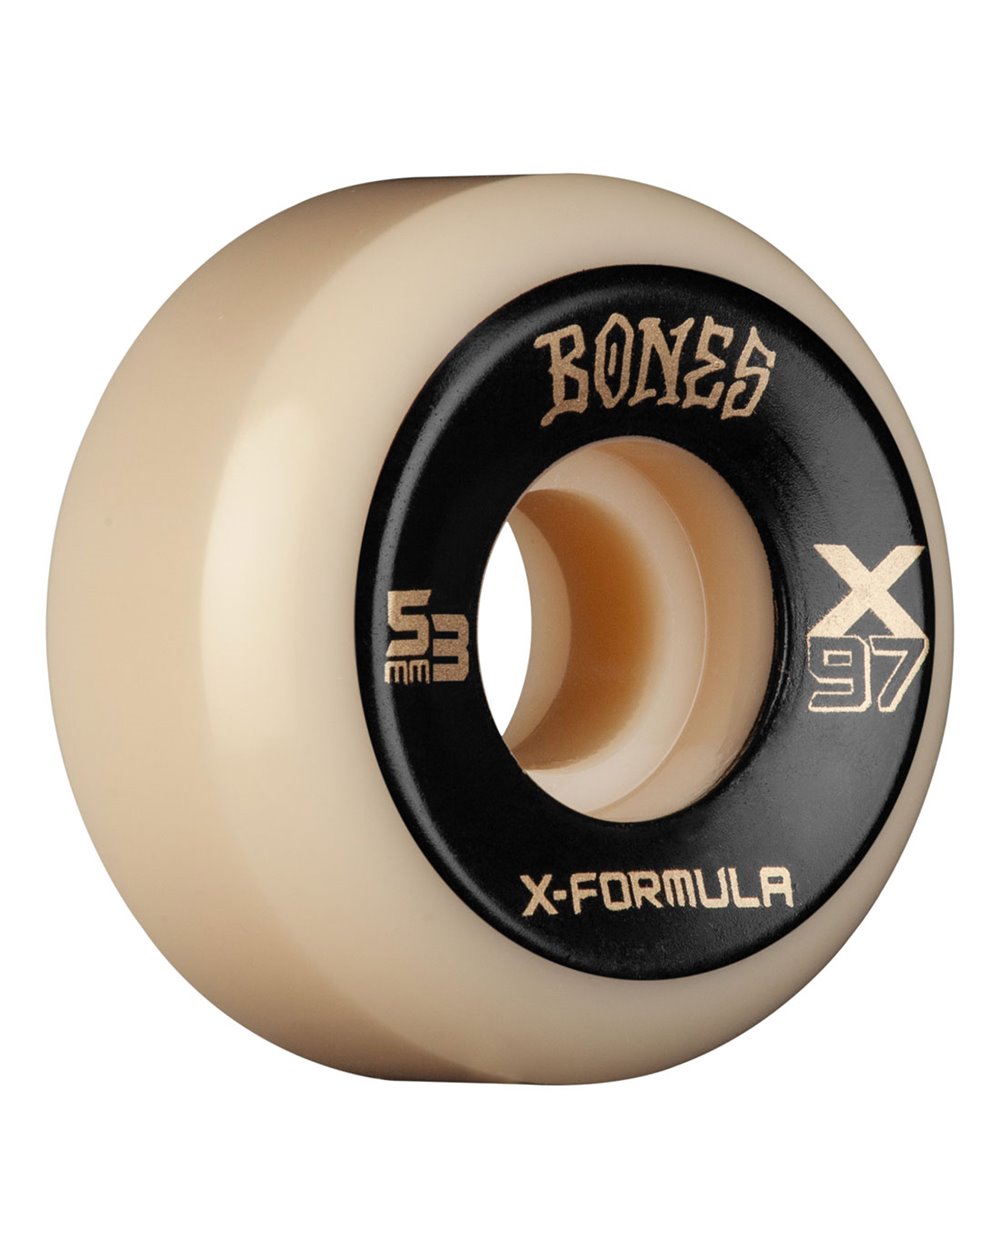 Bones Wheels X-Formula V5 Sidecut X-Ninety-Seven 53mm 97A Skateboard Wheels pack of 4